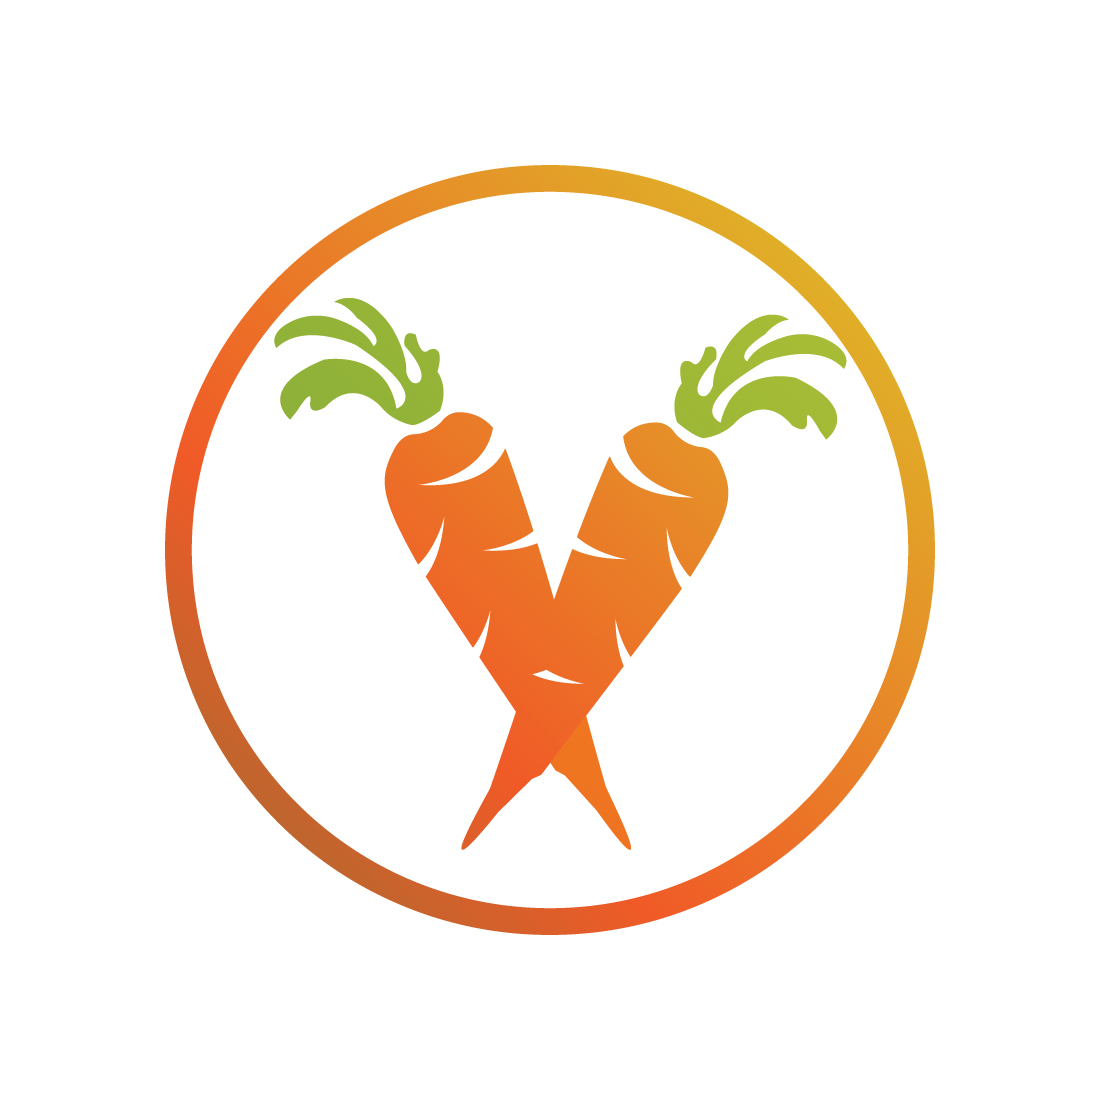 Carrot logo design vector images Carrot Green Rabbit Ears Stock vector template illustration preview image.